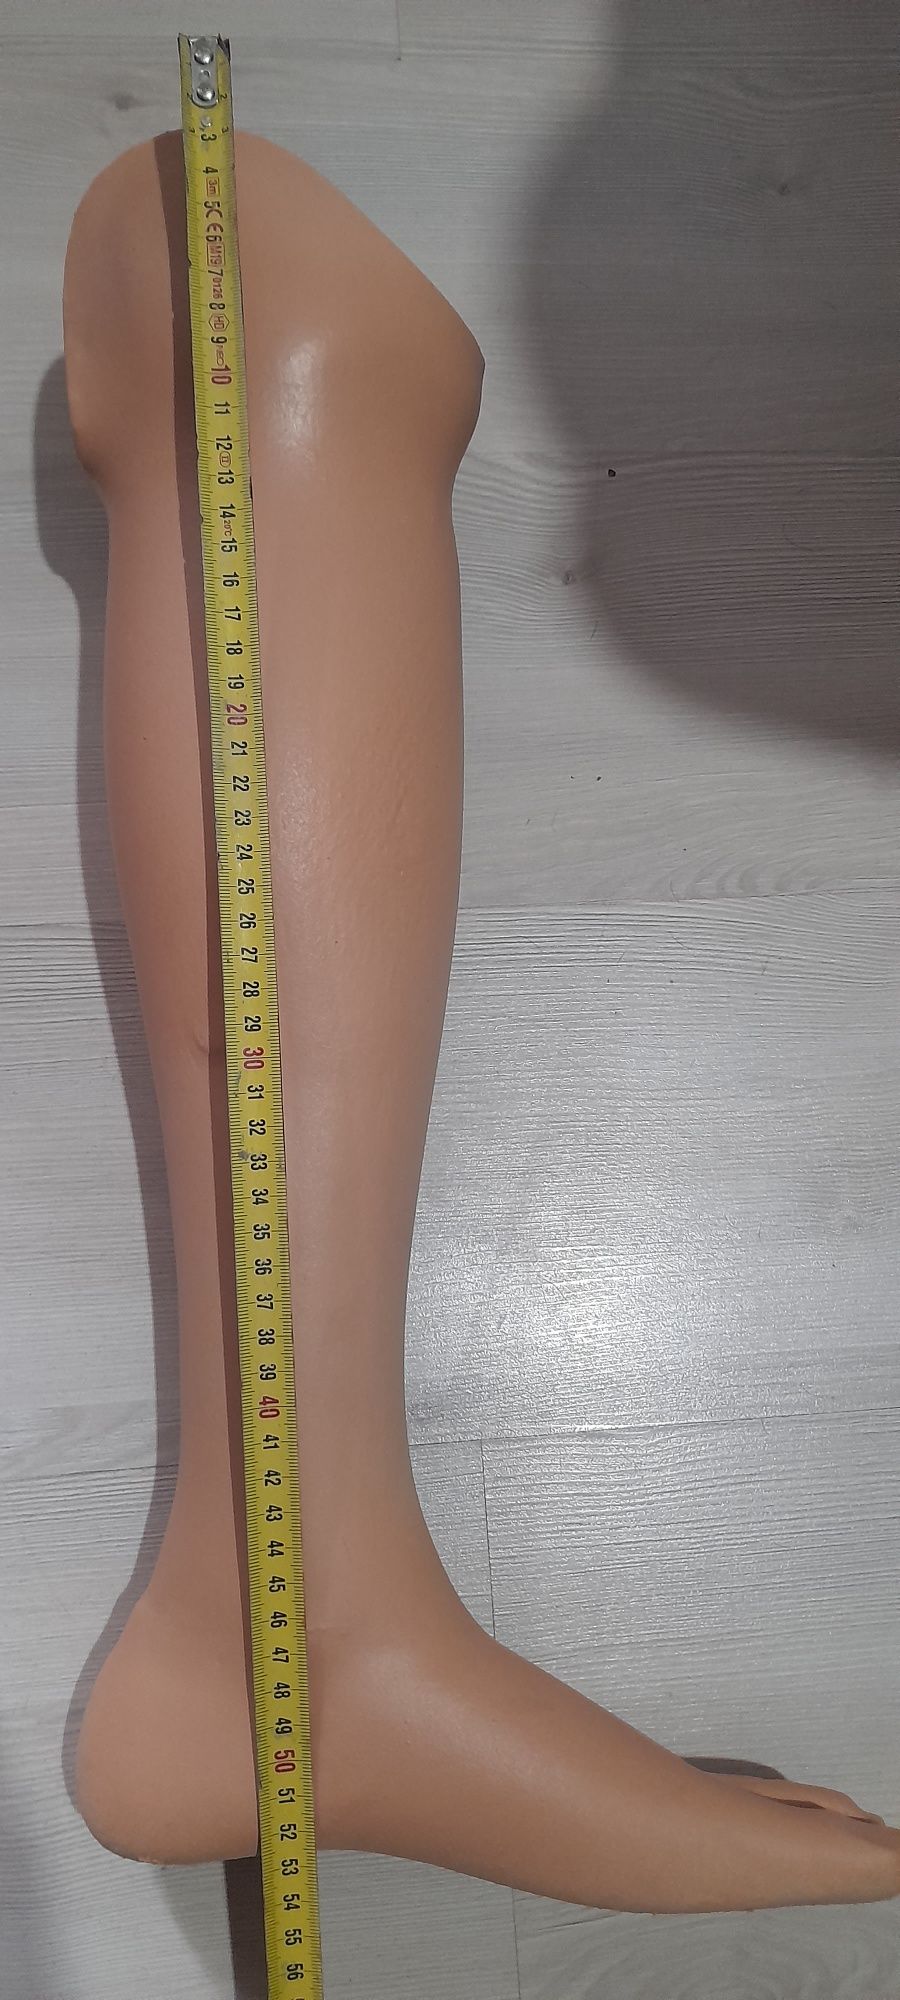 Proteza modulara gamba stânga